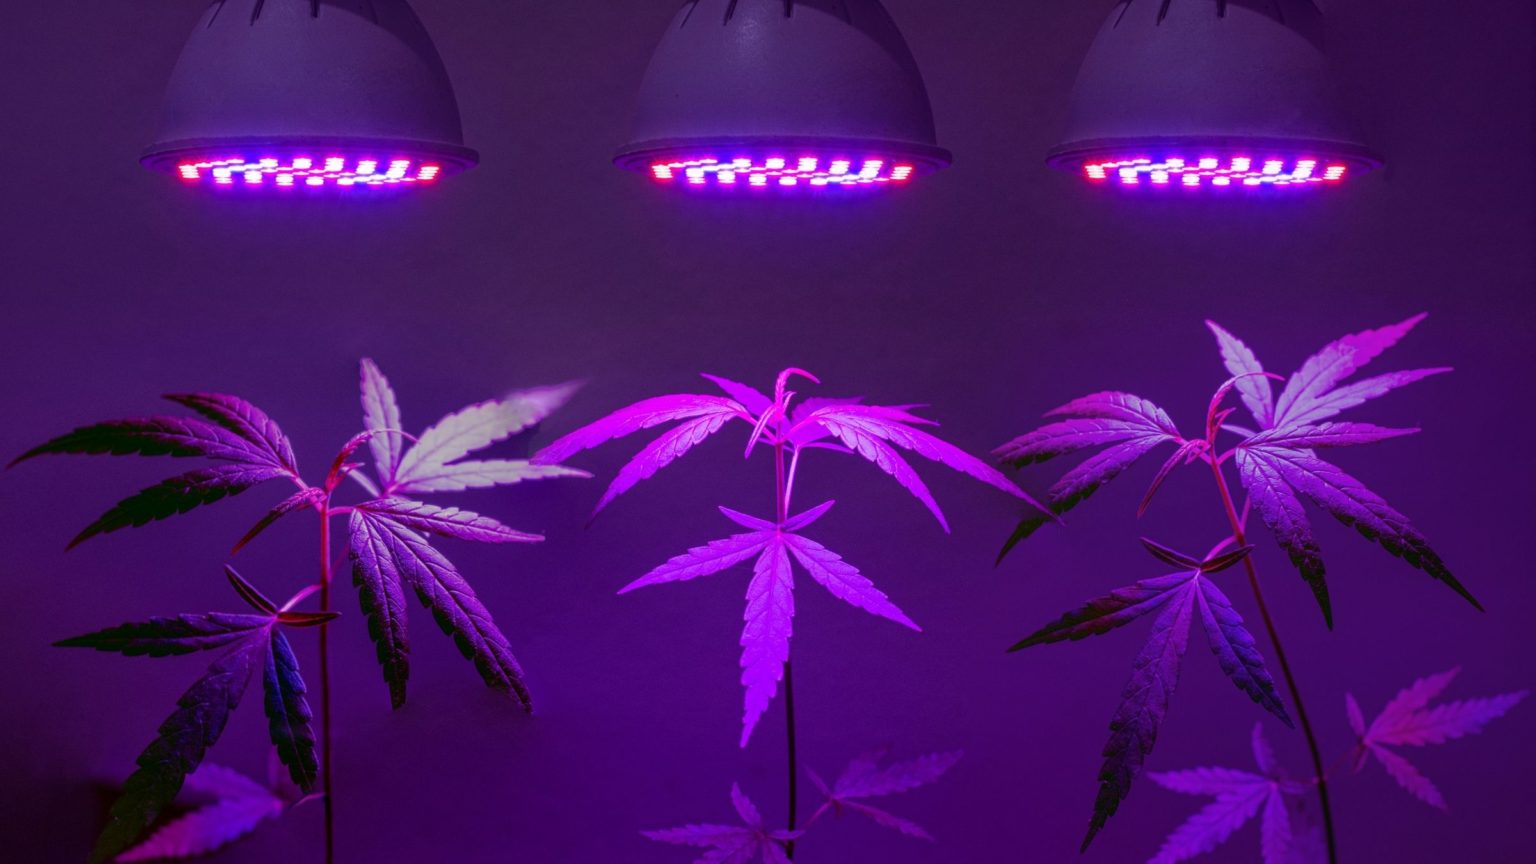 hwo to grow cannabis indoors